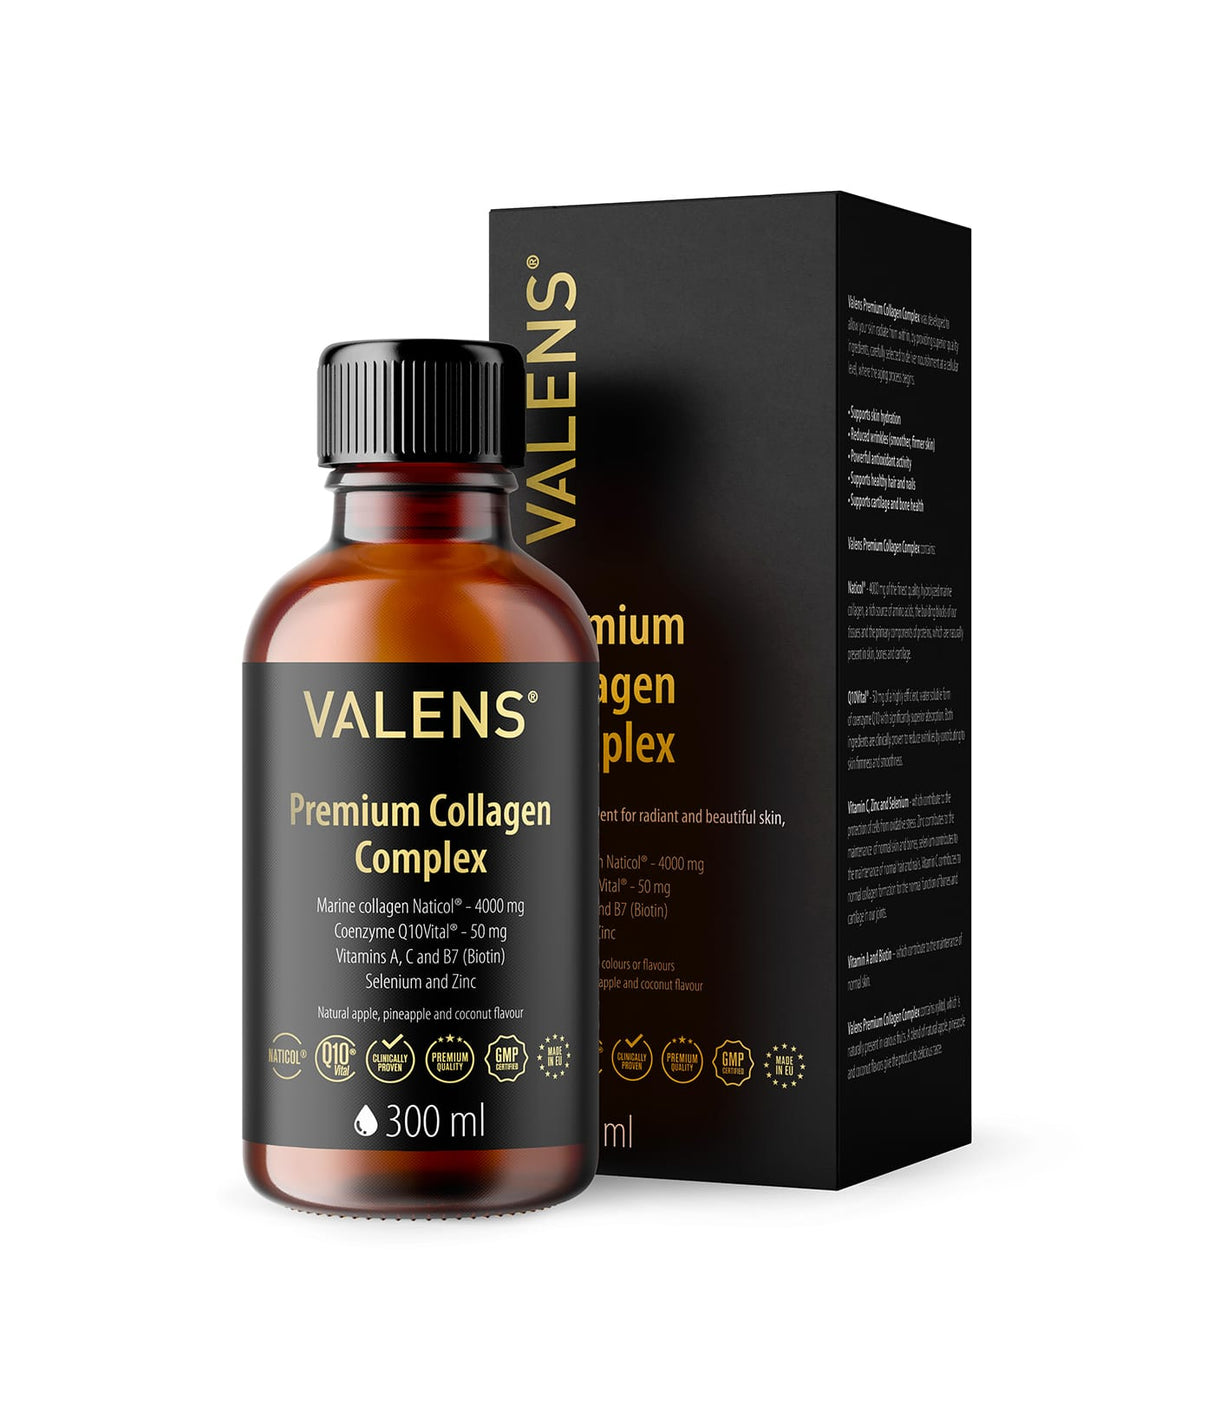 Premium Collagen Complex de Valens